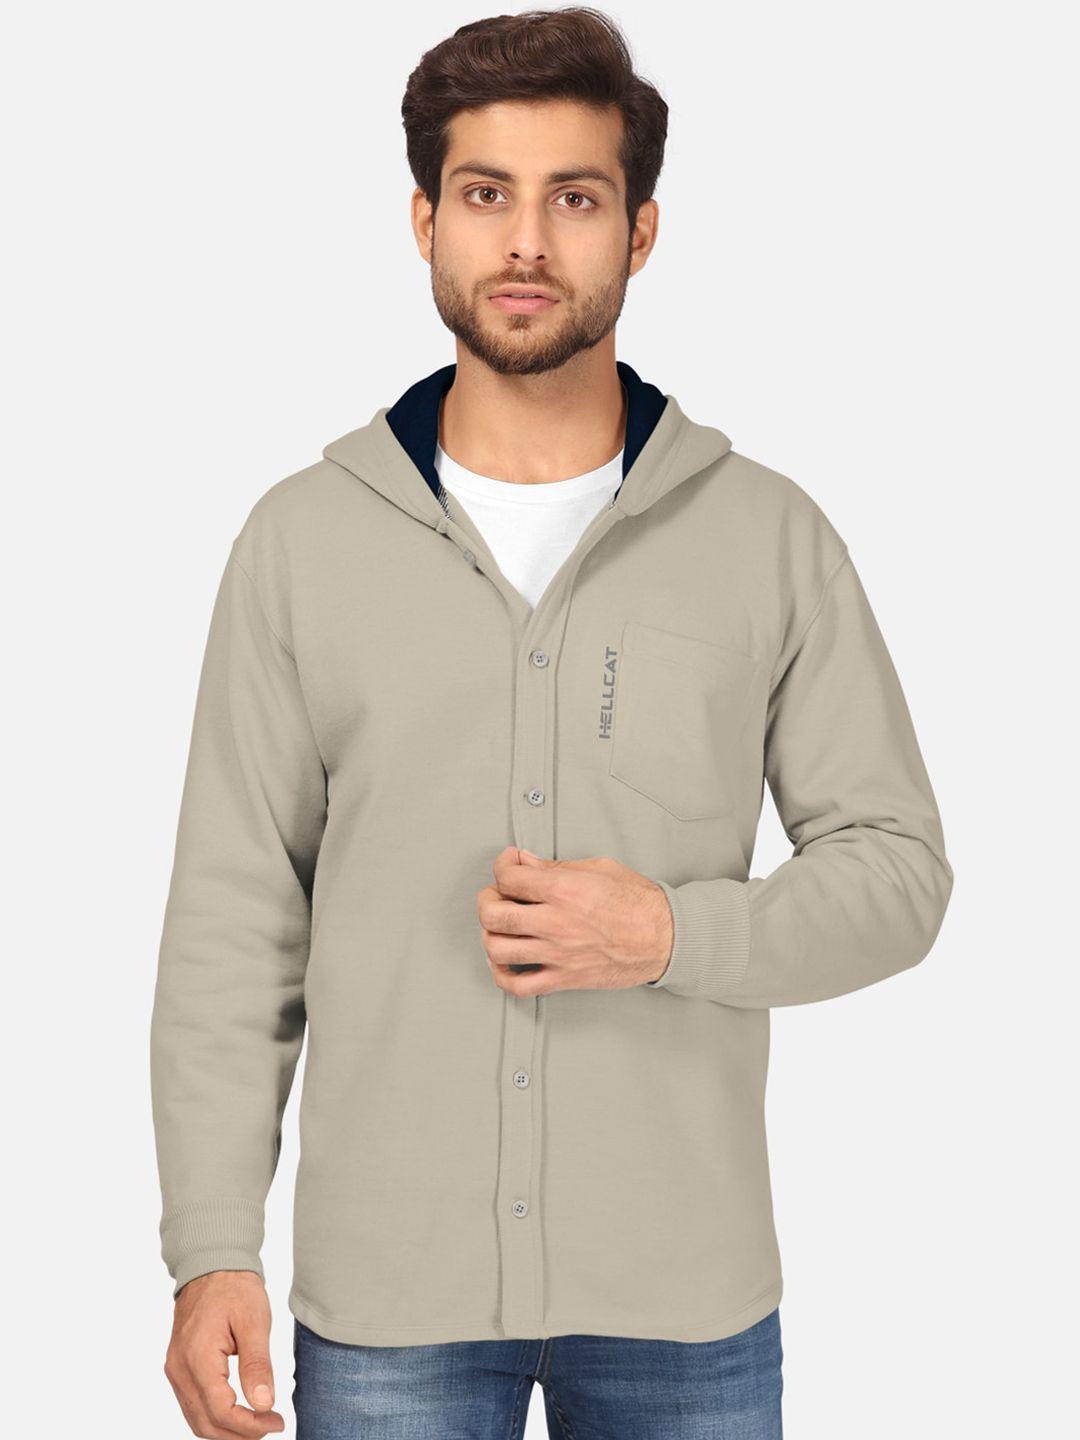 bullmer men cream-coloured hooded sweatshirt